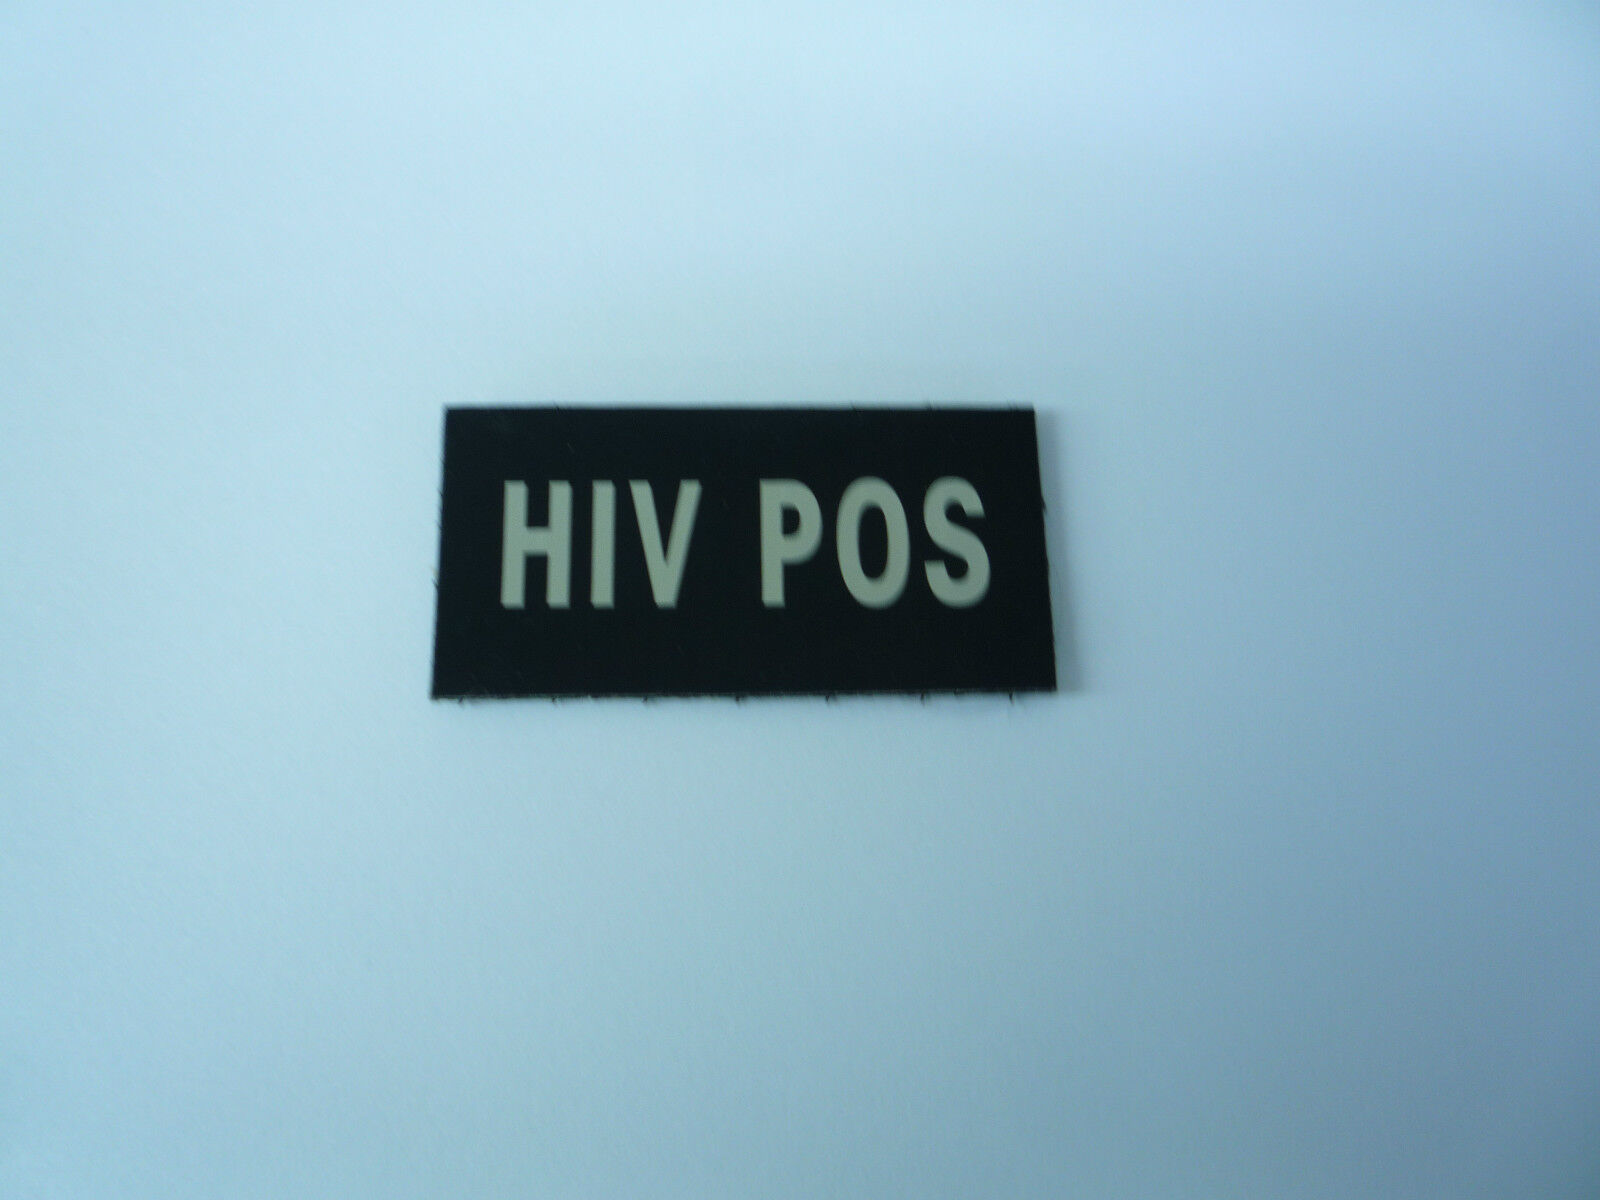 HIV POS ALLERT PATCH DESERT TAN ON IR 2